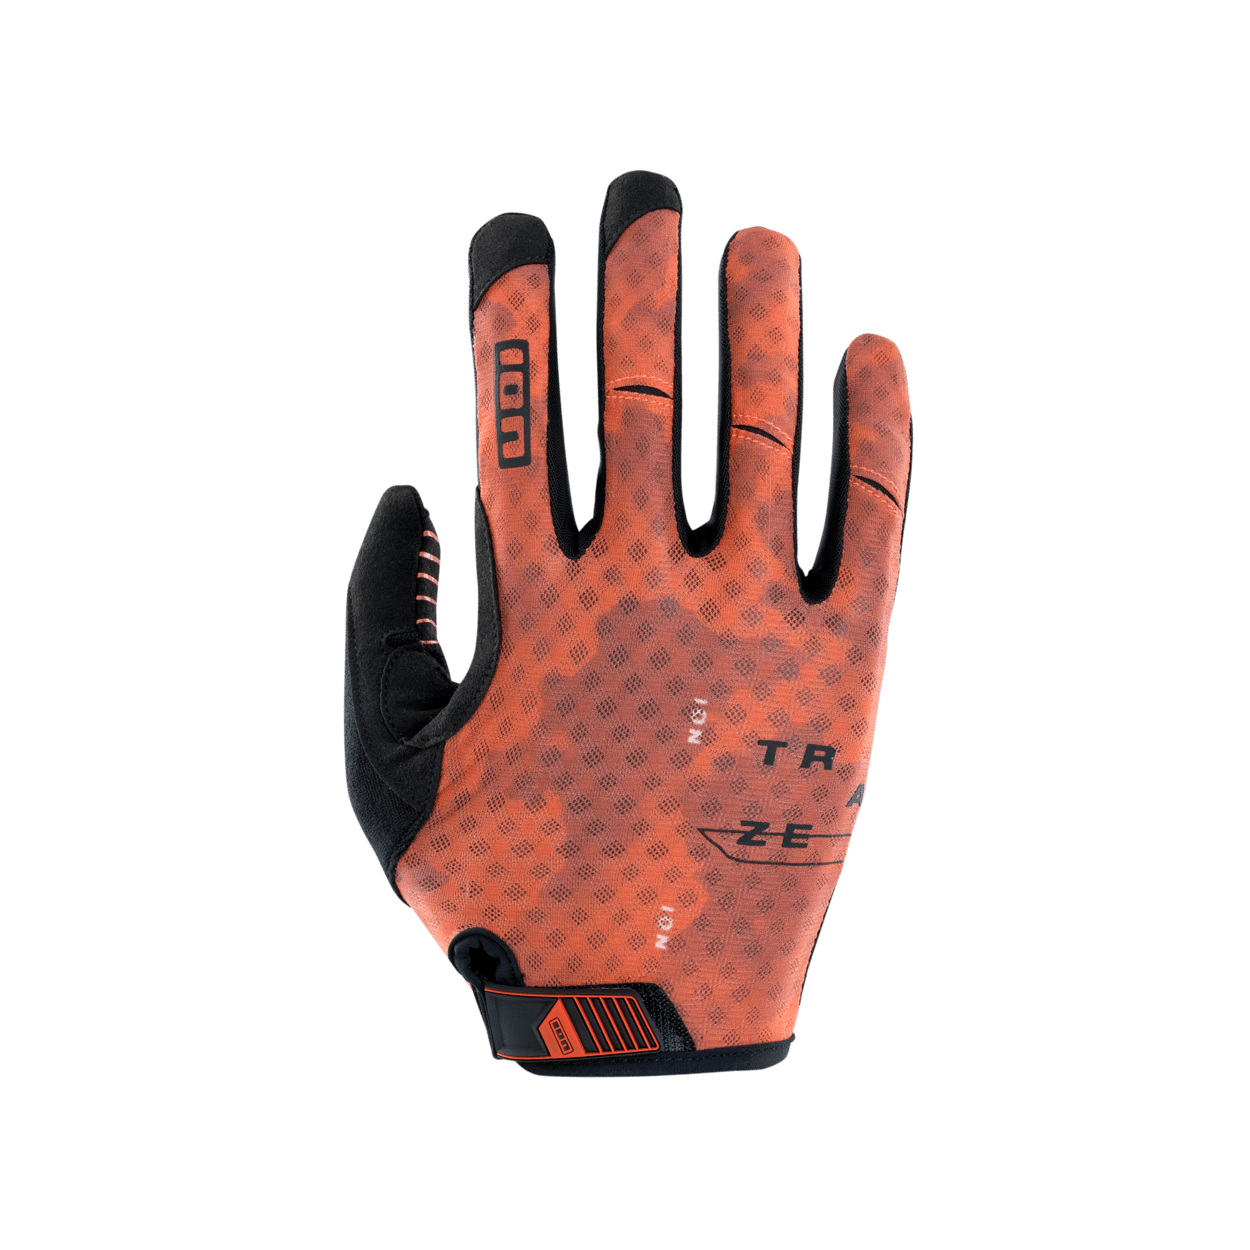 MTB Gloves Traze Long